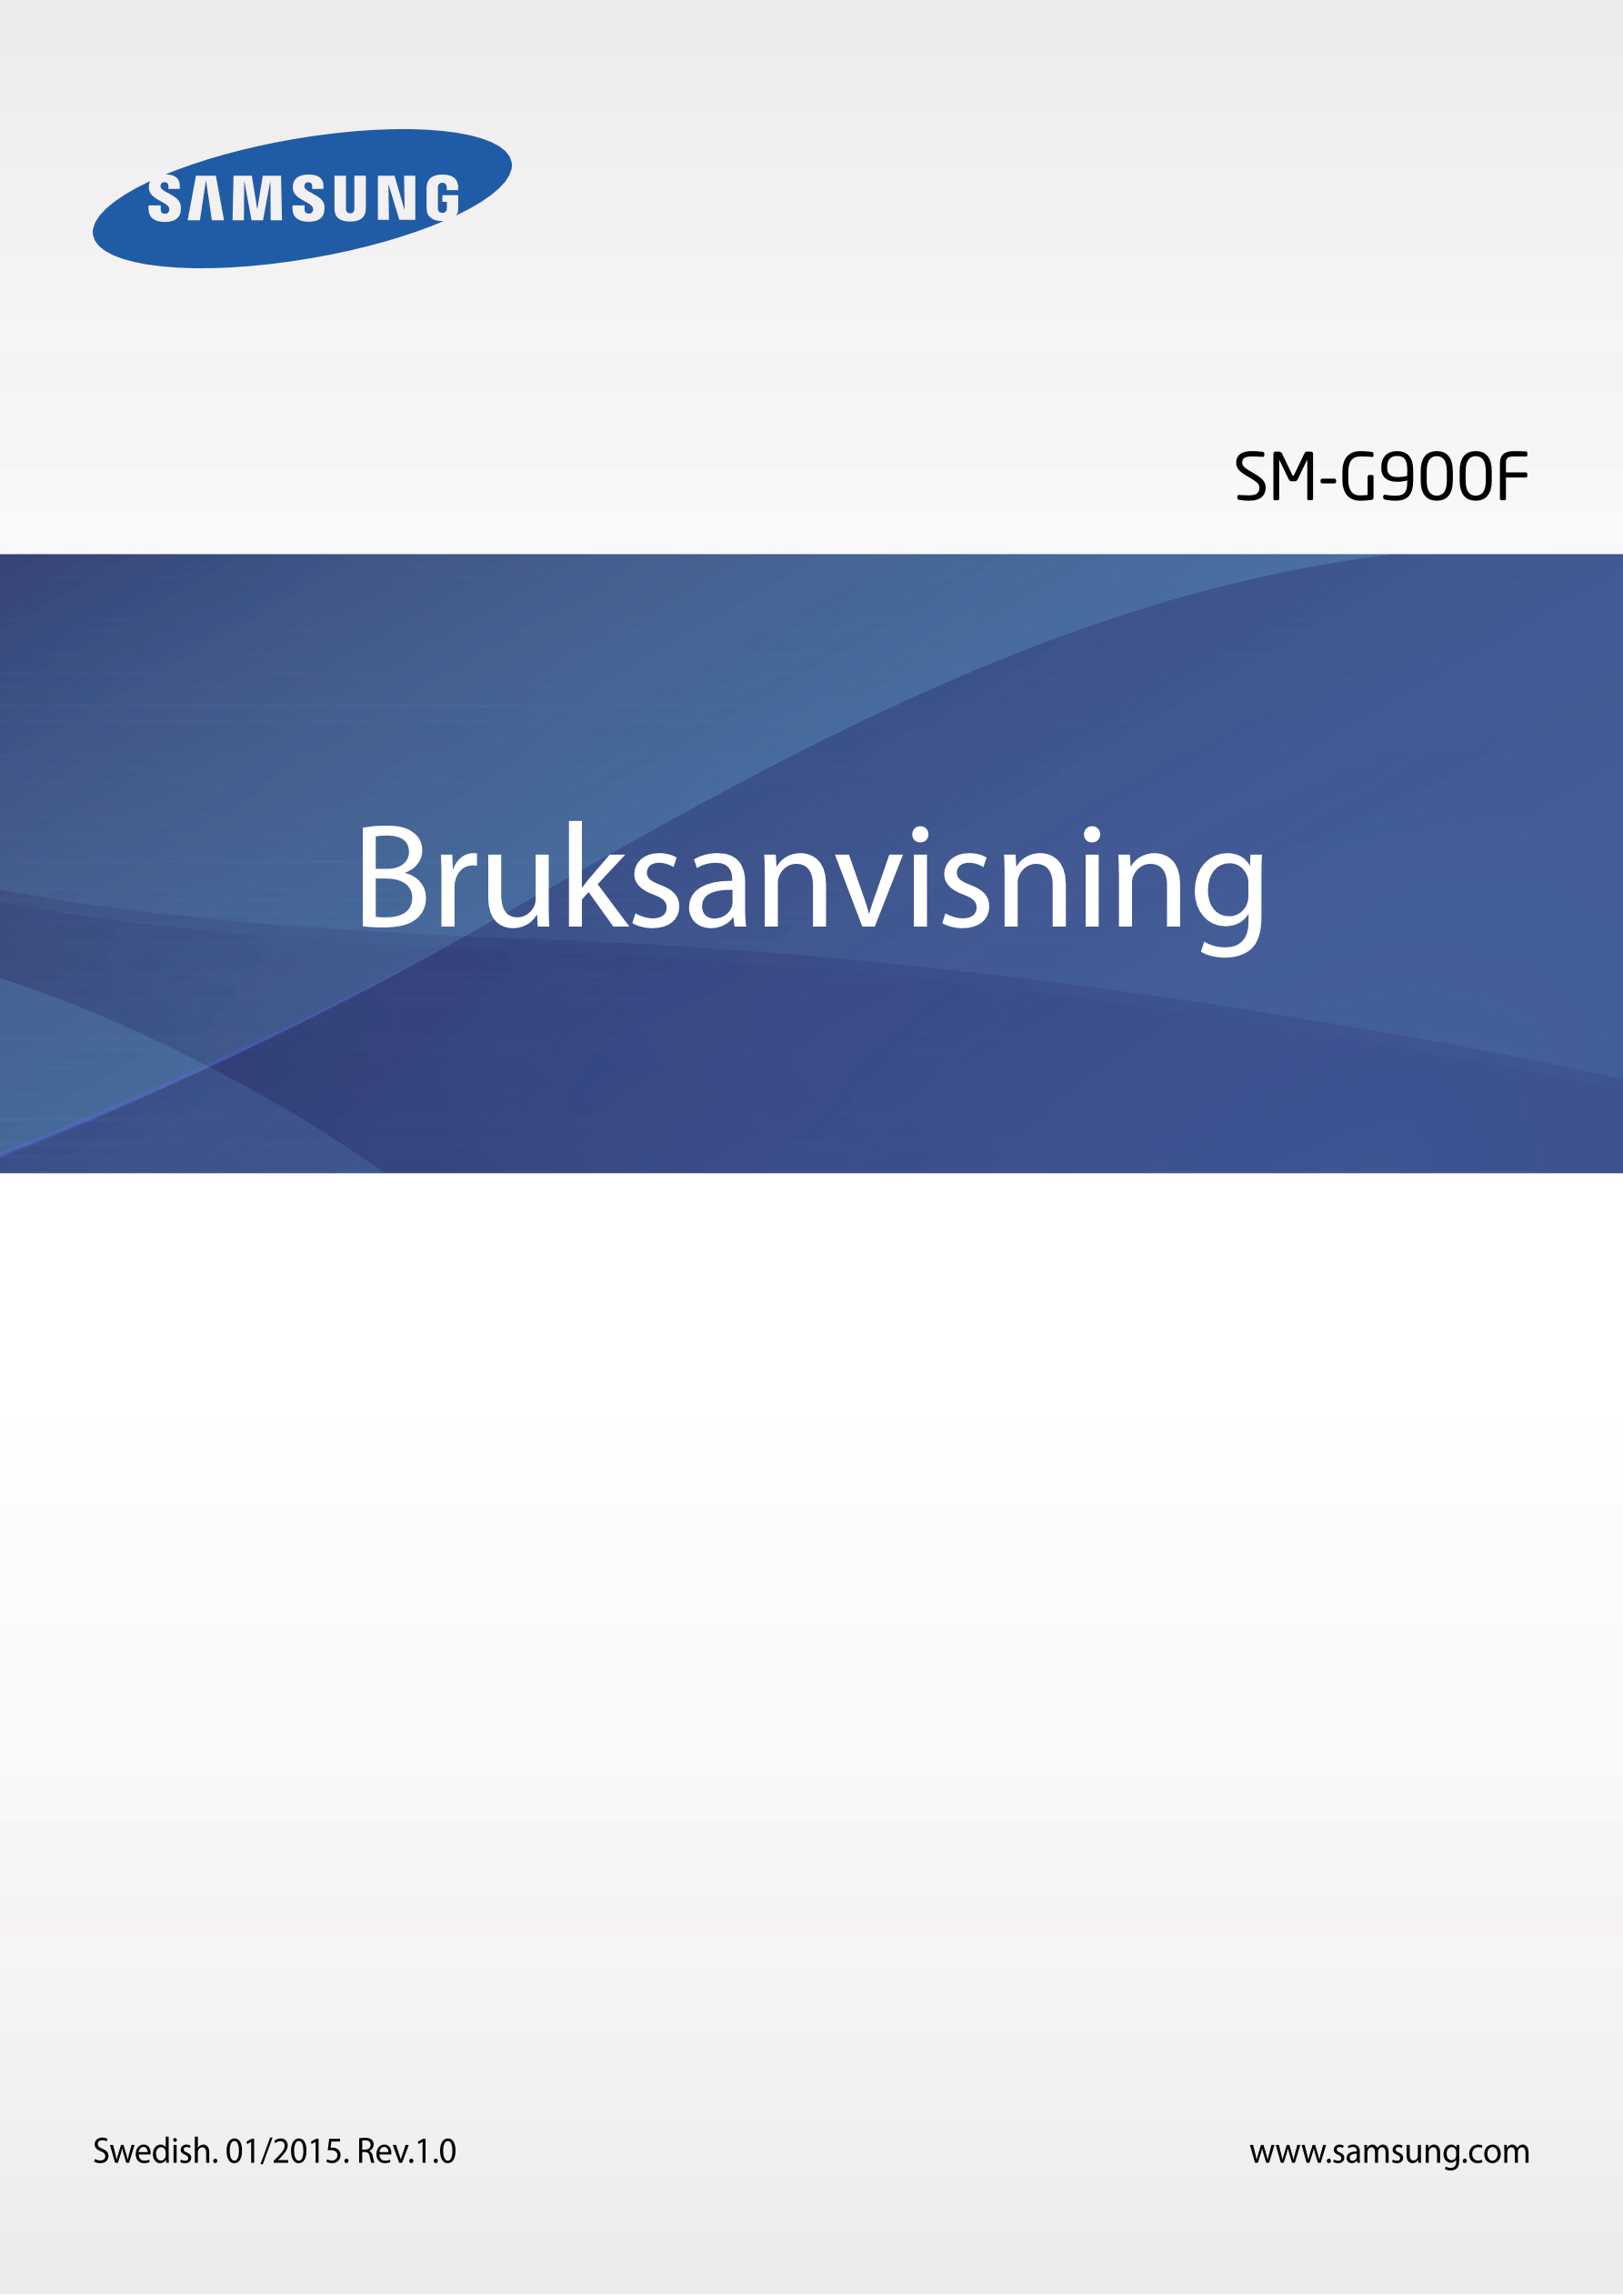 SM-G900F
Bruksanvisning
Swedish. 01/2015. Rev.1.0 www.samsung.com